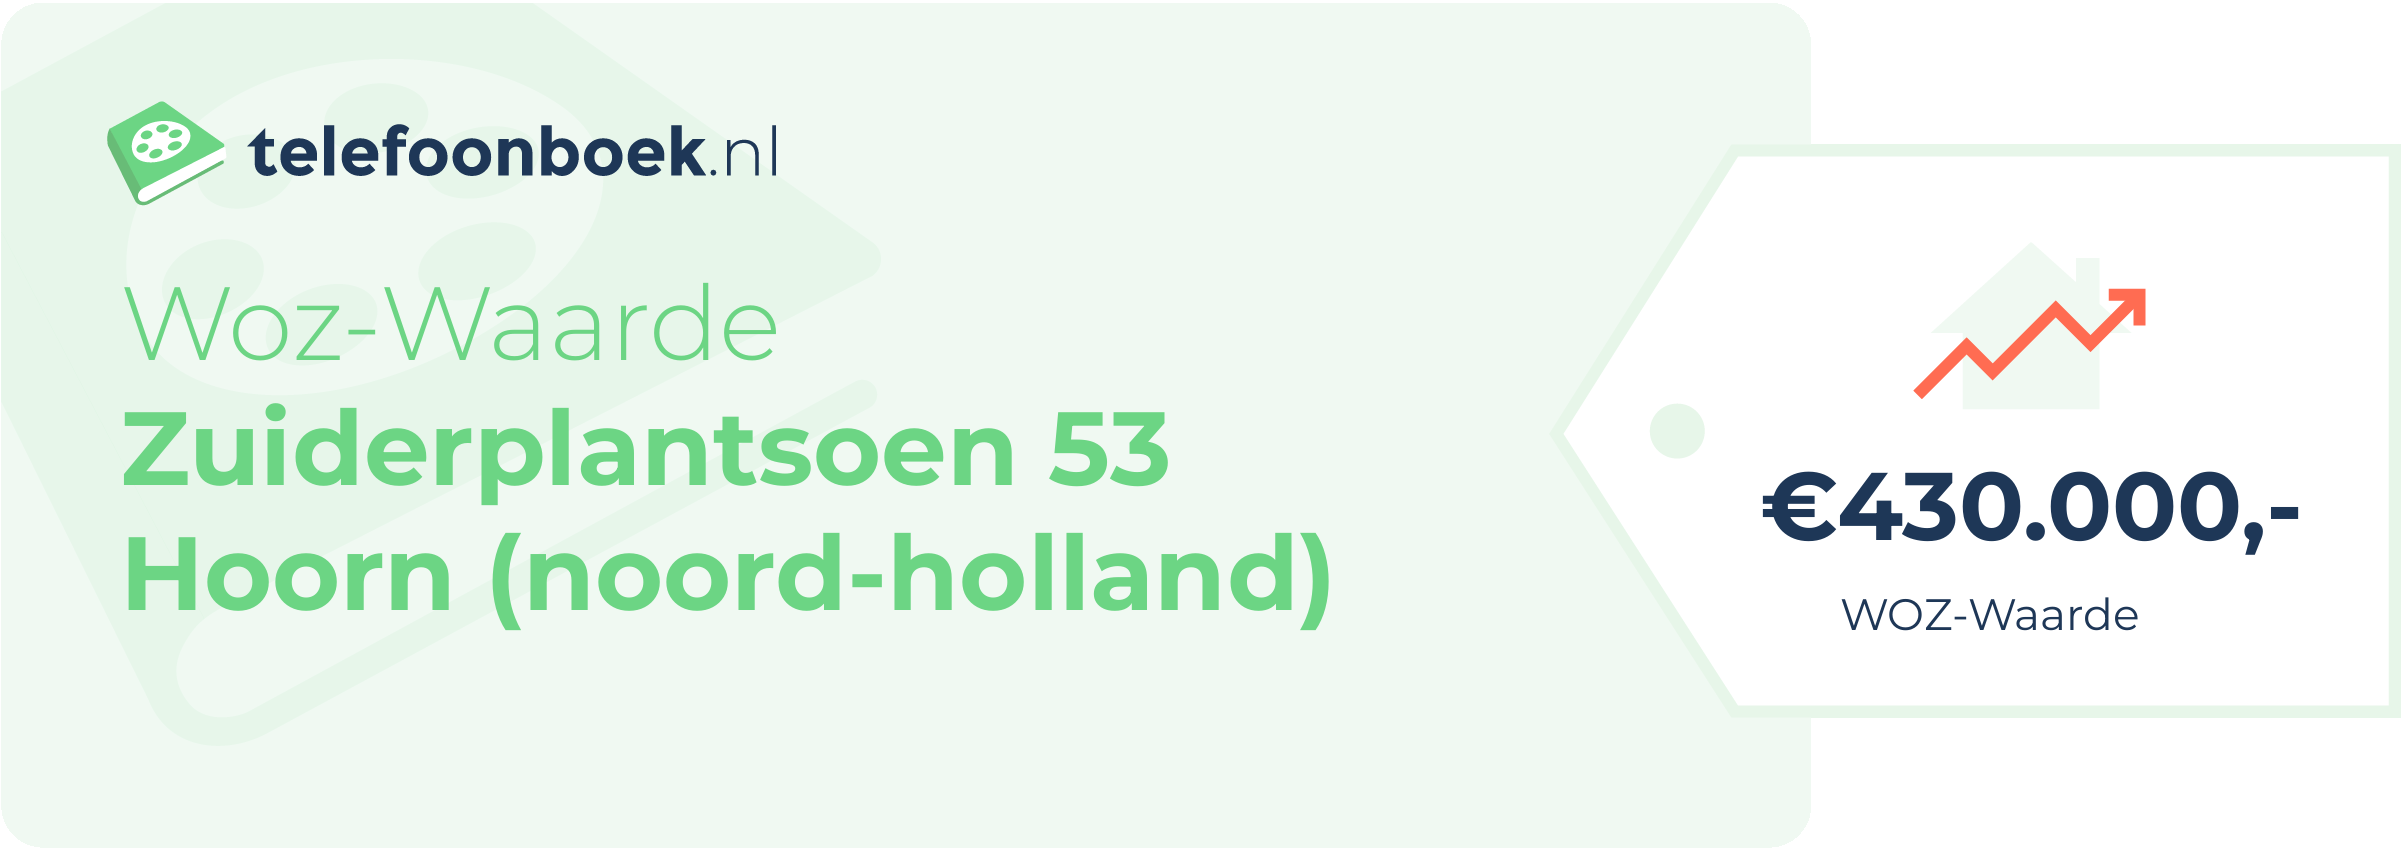 WOZ-waarde Zuiderplantsoen 53 Hoorn (Noord-Holland)